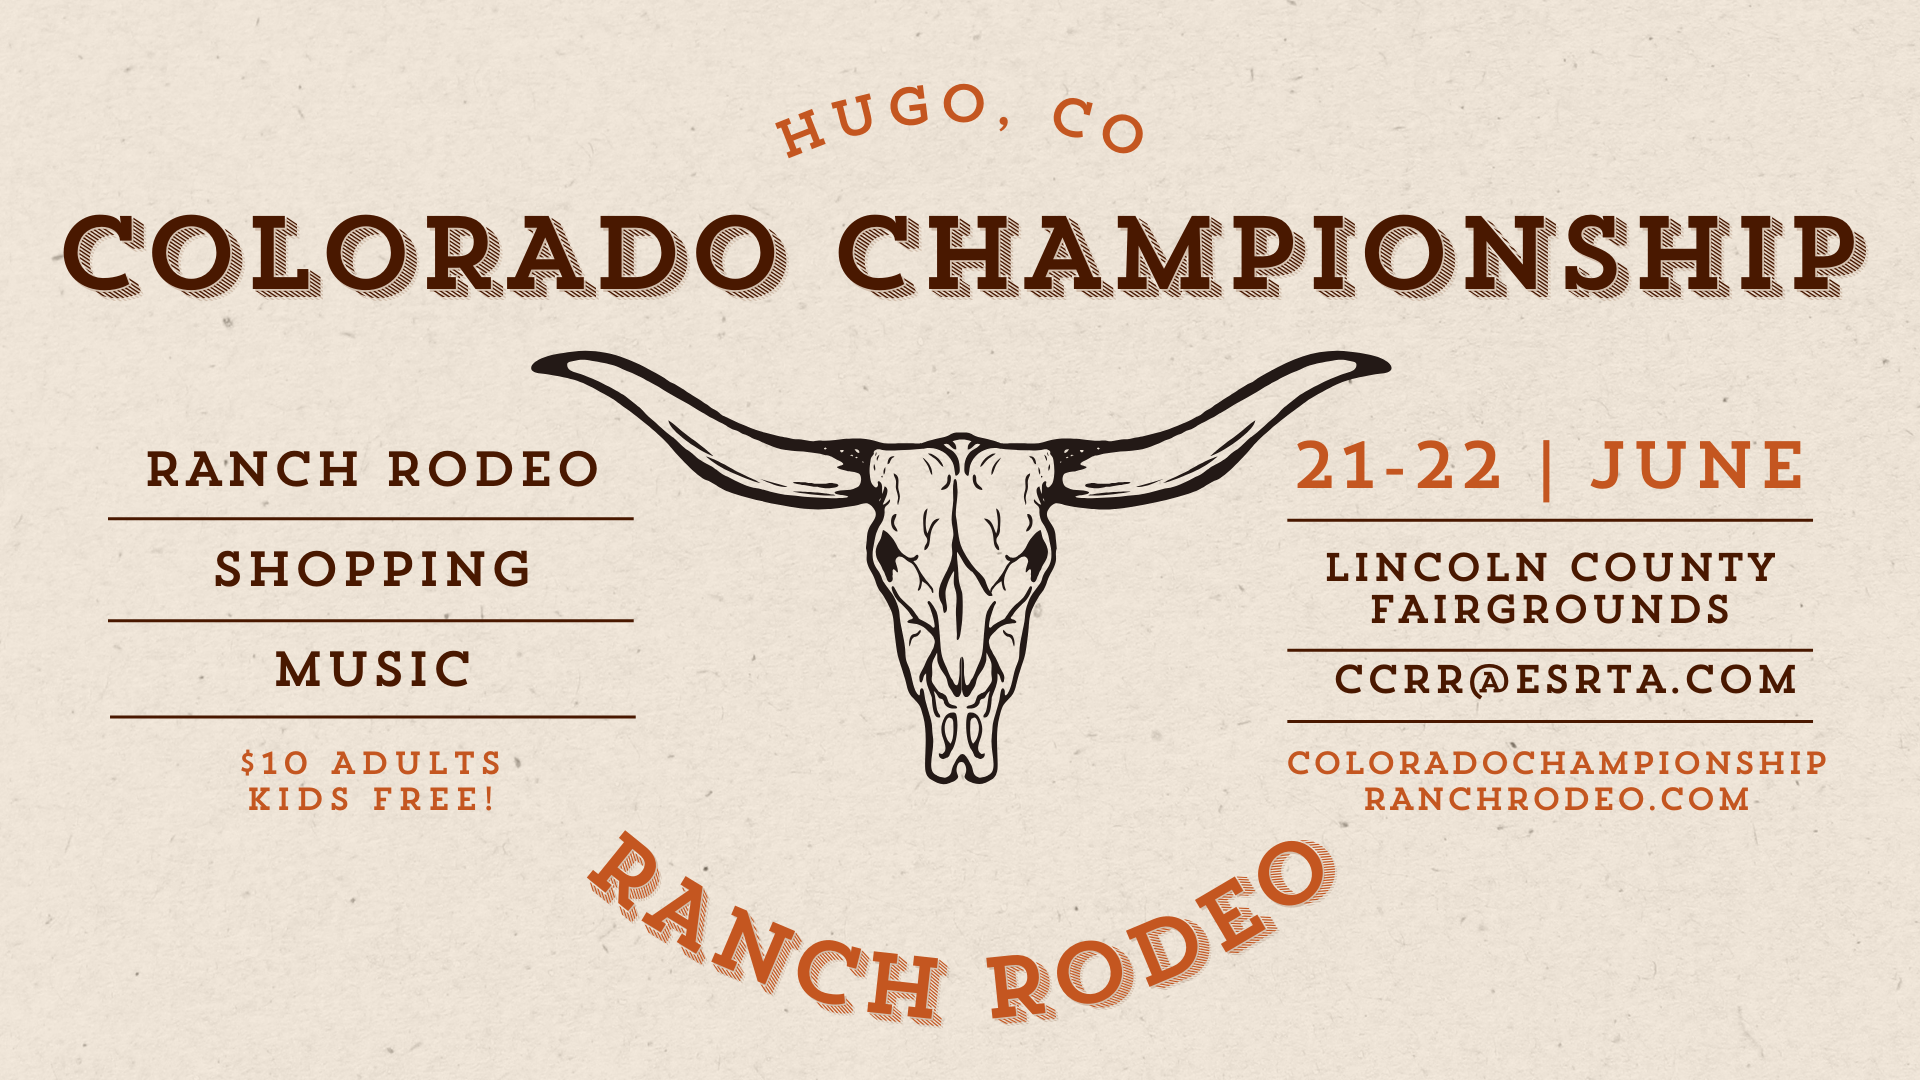 Colorado Championship Ranch Rodeo